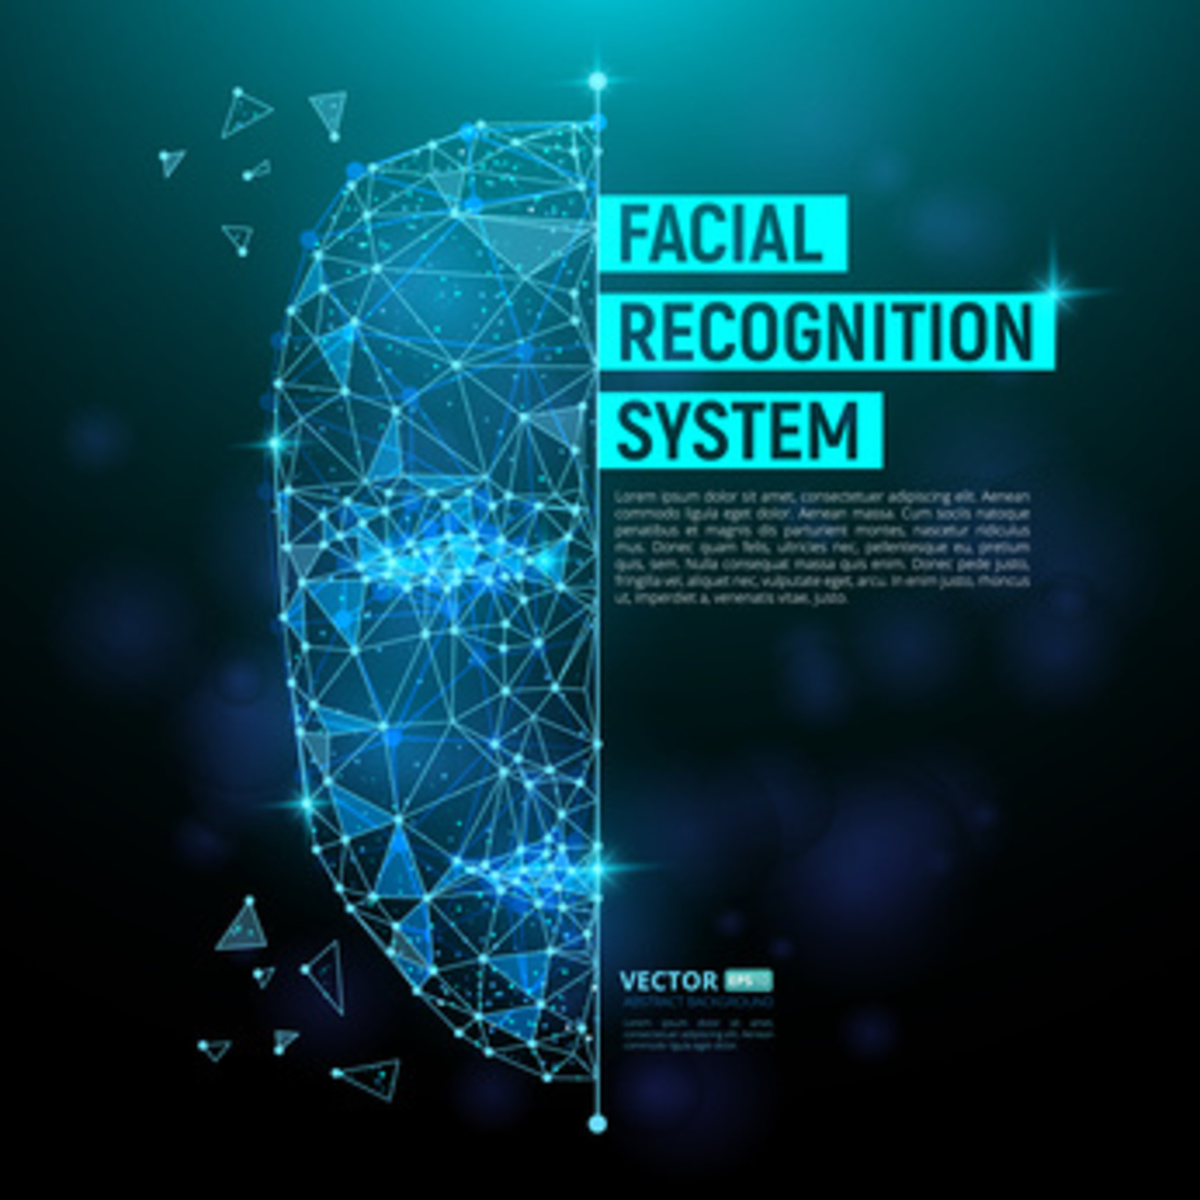 【AI】顔認識技術の世界動向と問題点---世界の捜査機関での利用が加速、誤認識や非検知の問題